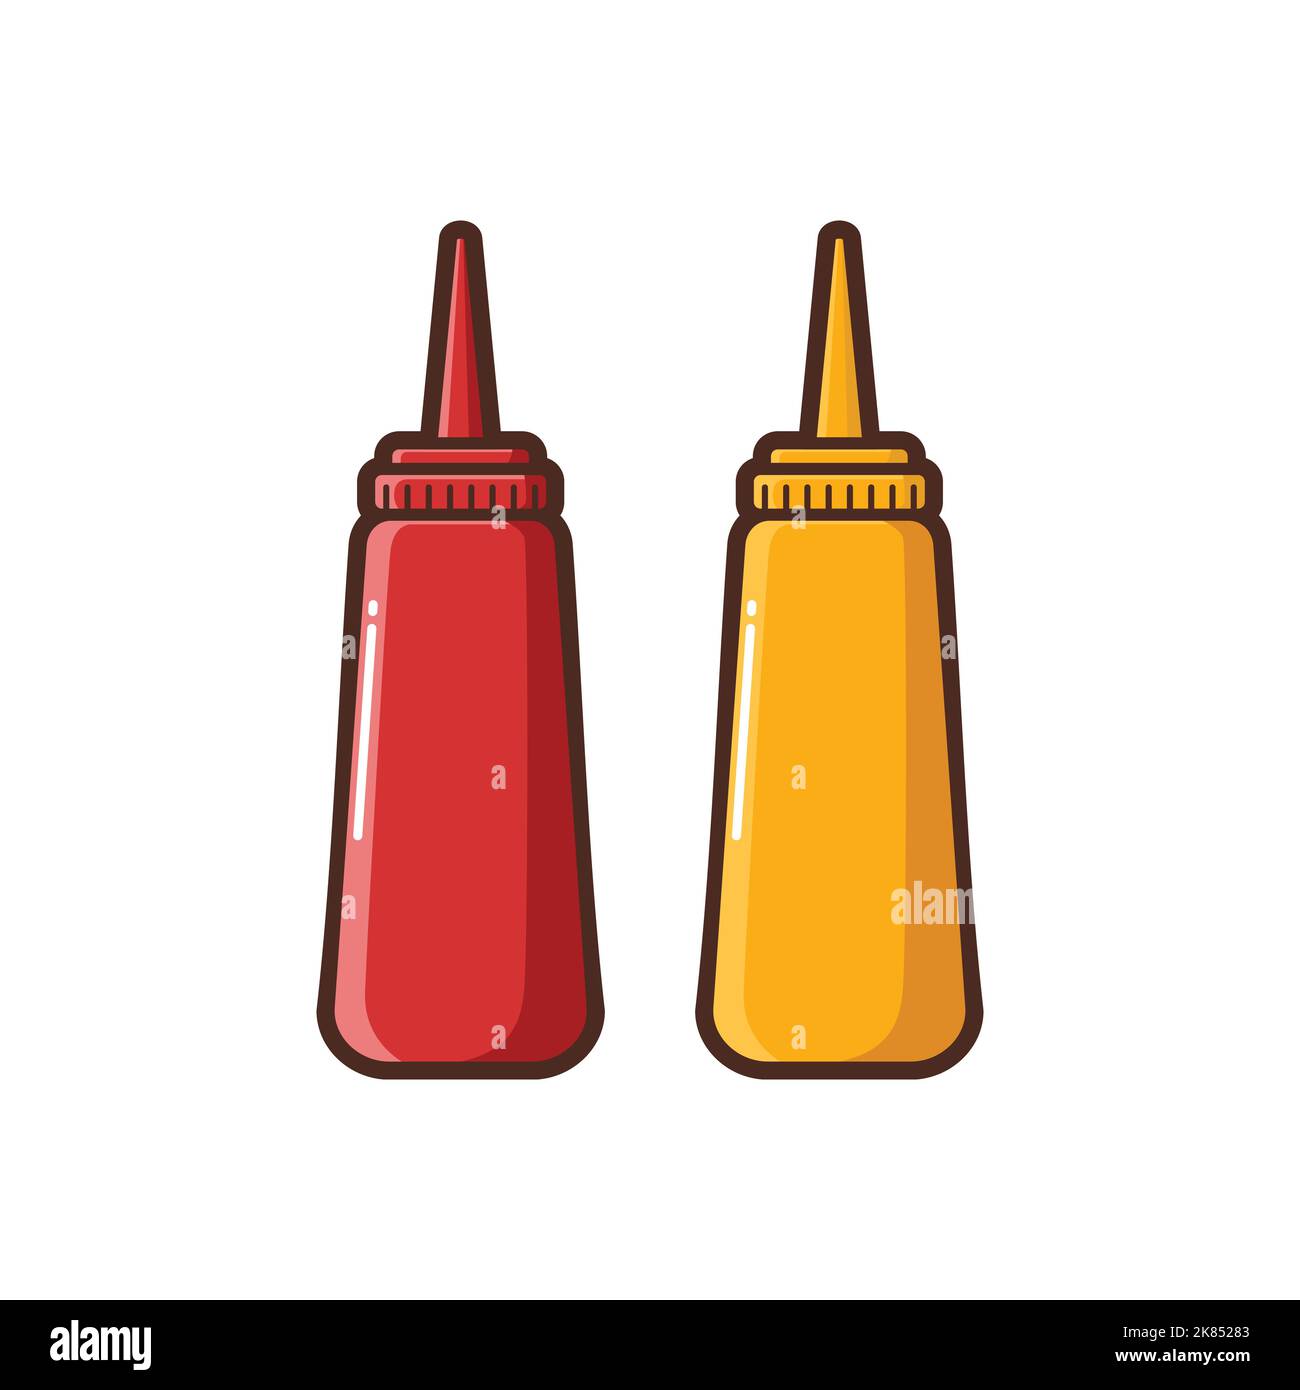 Salsa e maionese Ketchup bottiglia Cartoon Vector Illustration - Fast Food Illustration - Cartoon minimalista Illustrazione Vettoriale